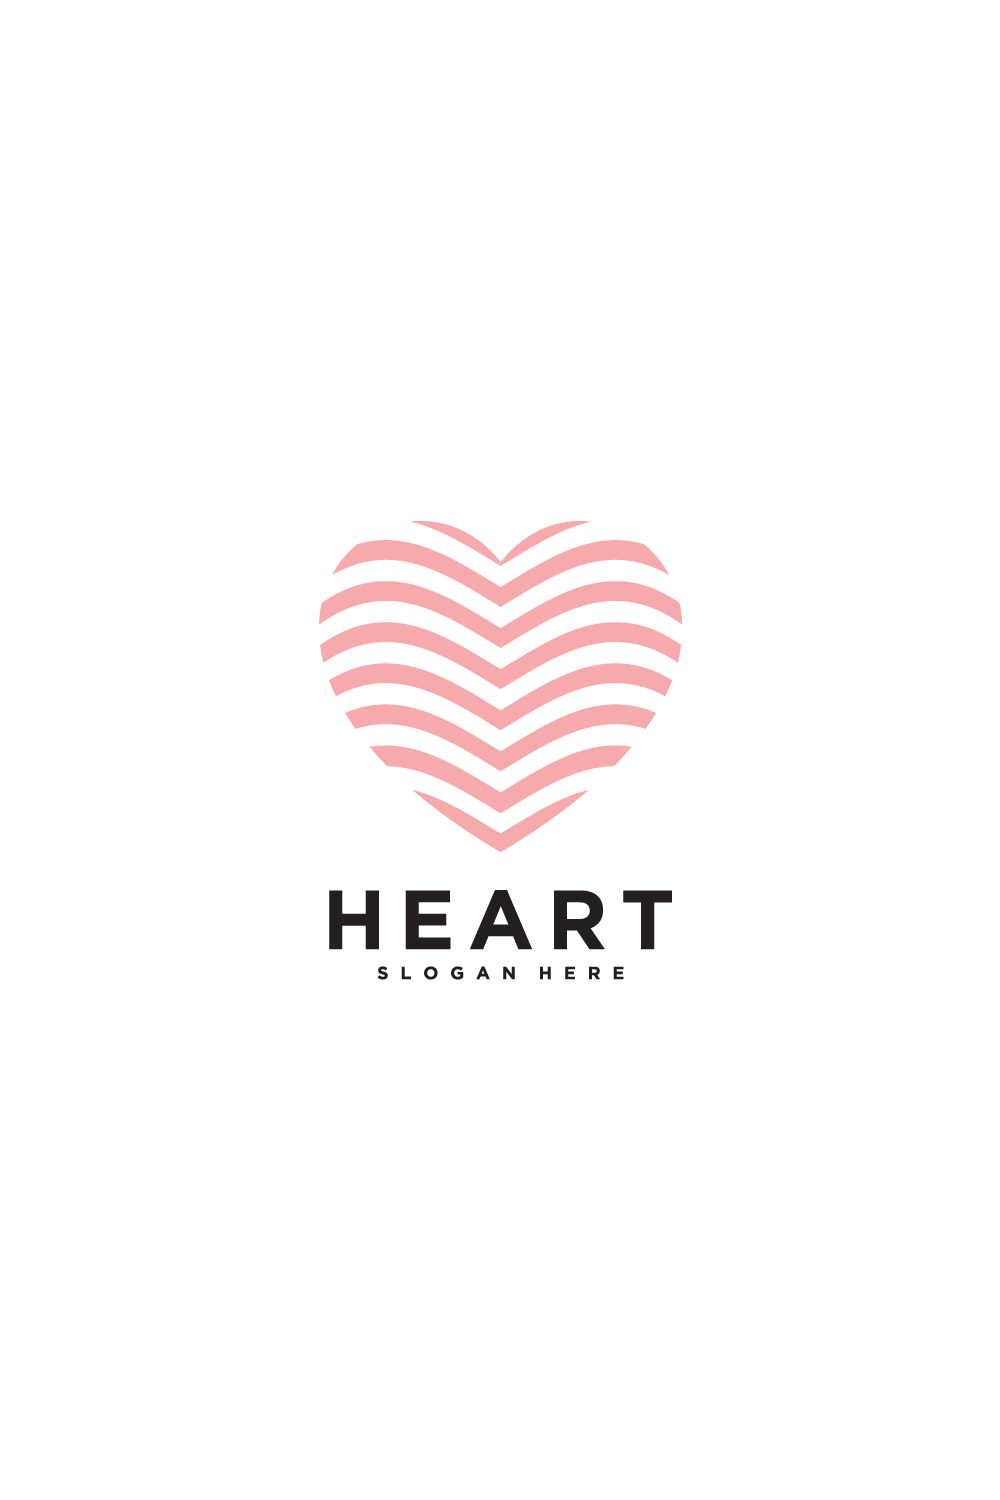 heart logo pinterest preview image.